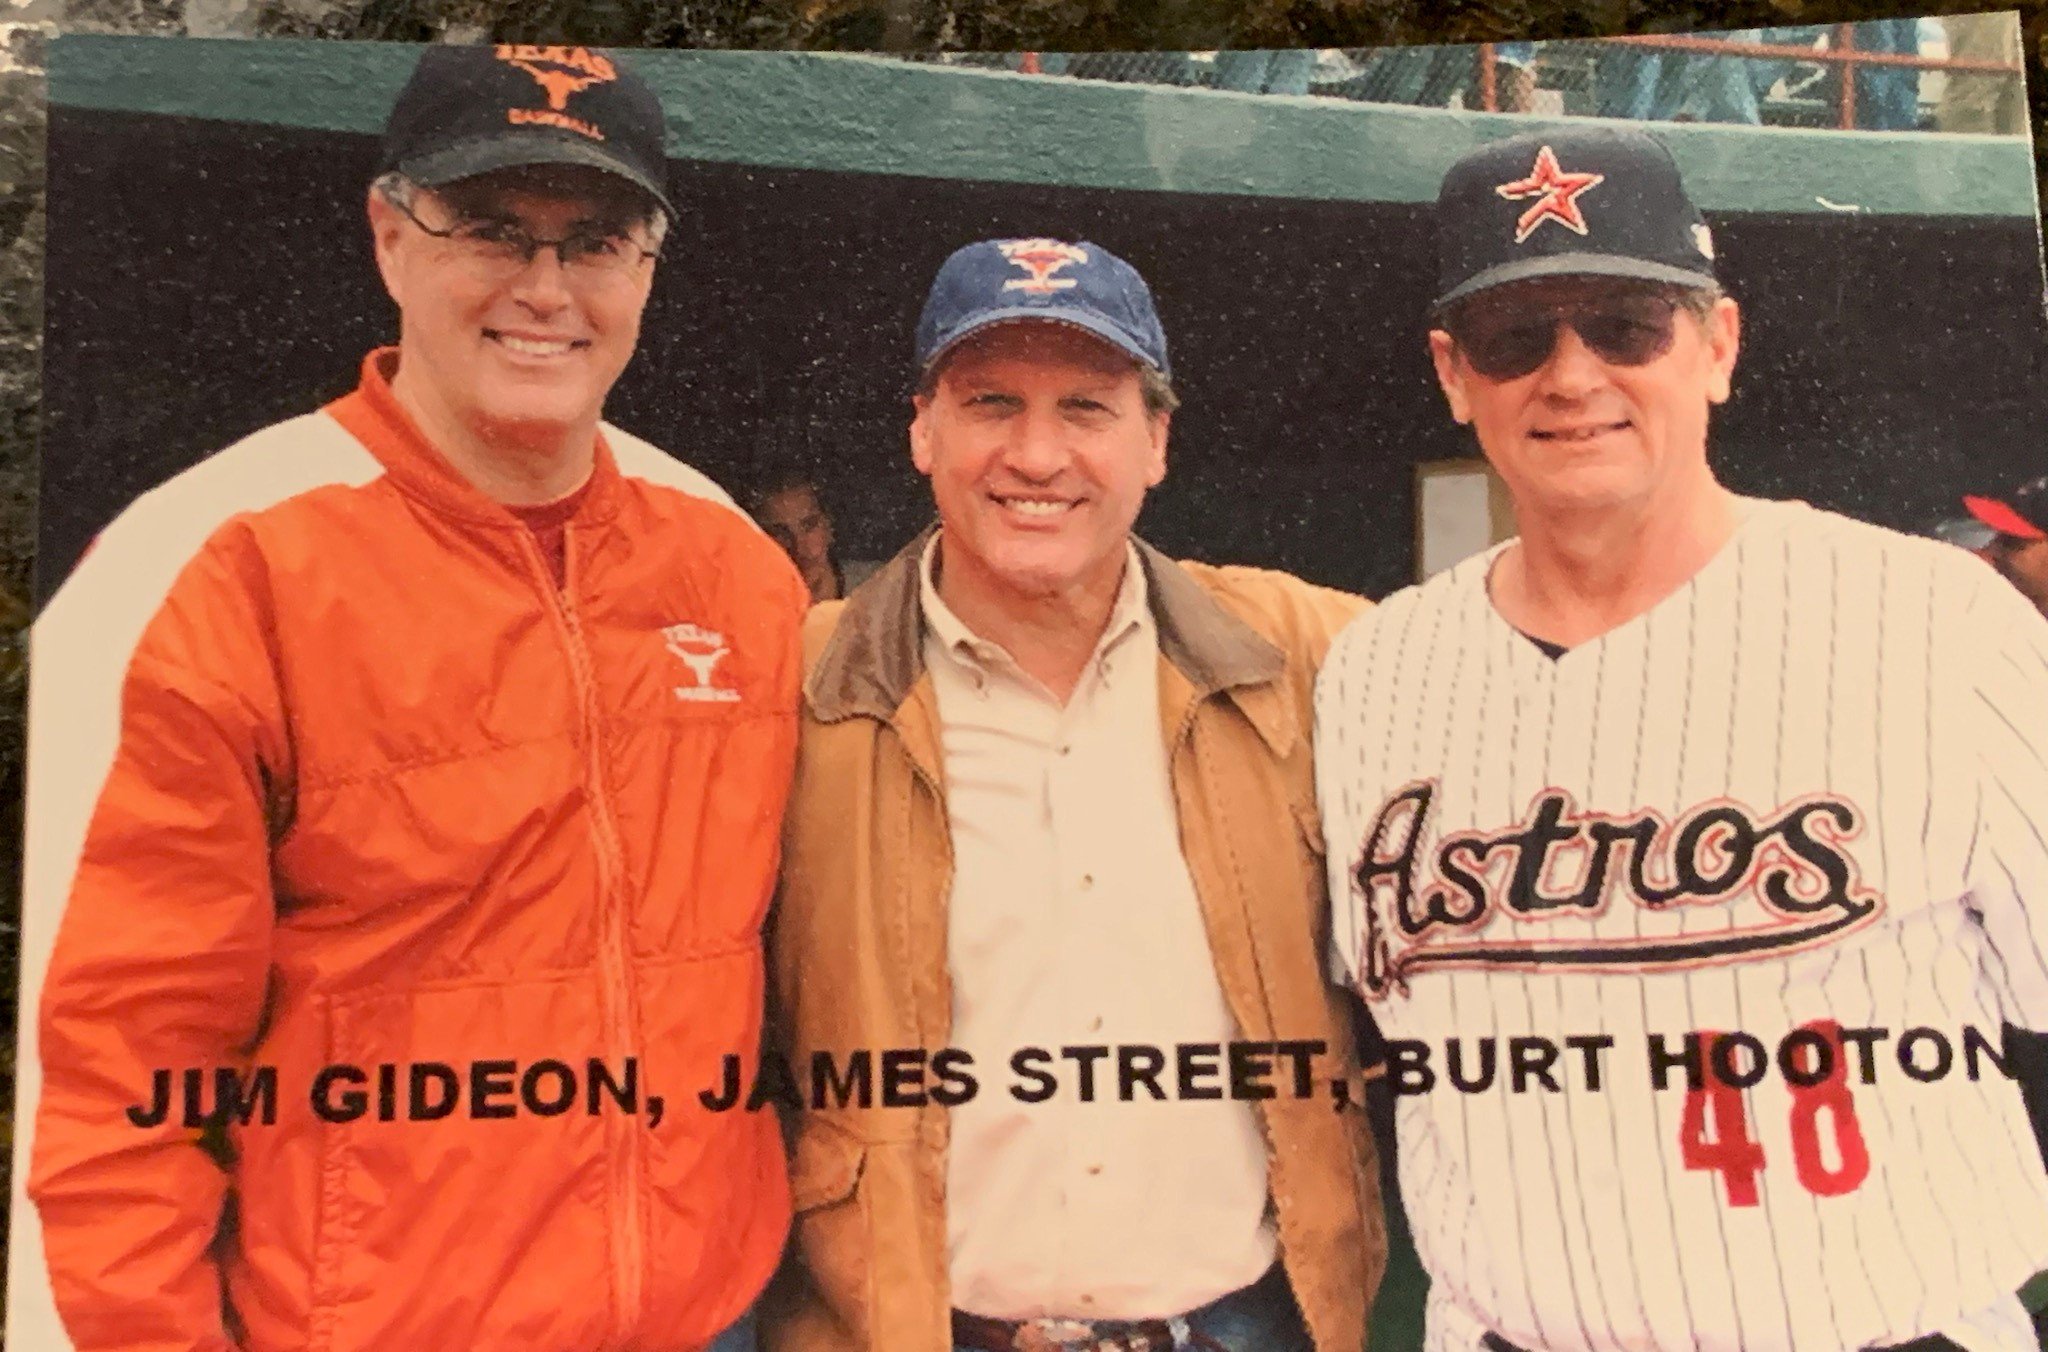  Jim Gideon, James Street, and Burt Hooton  